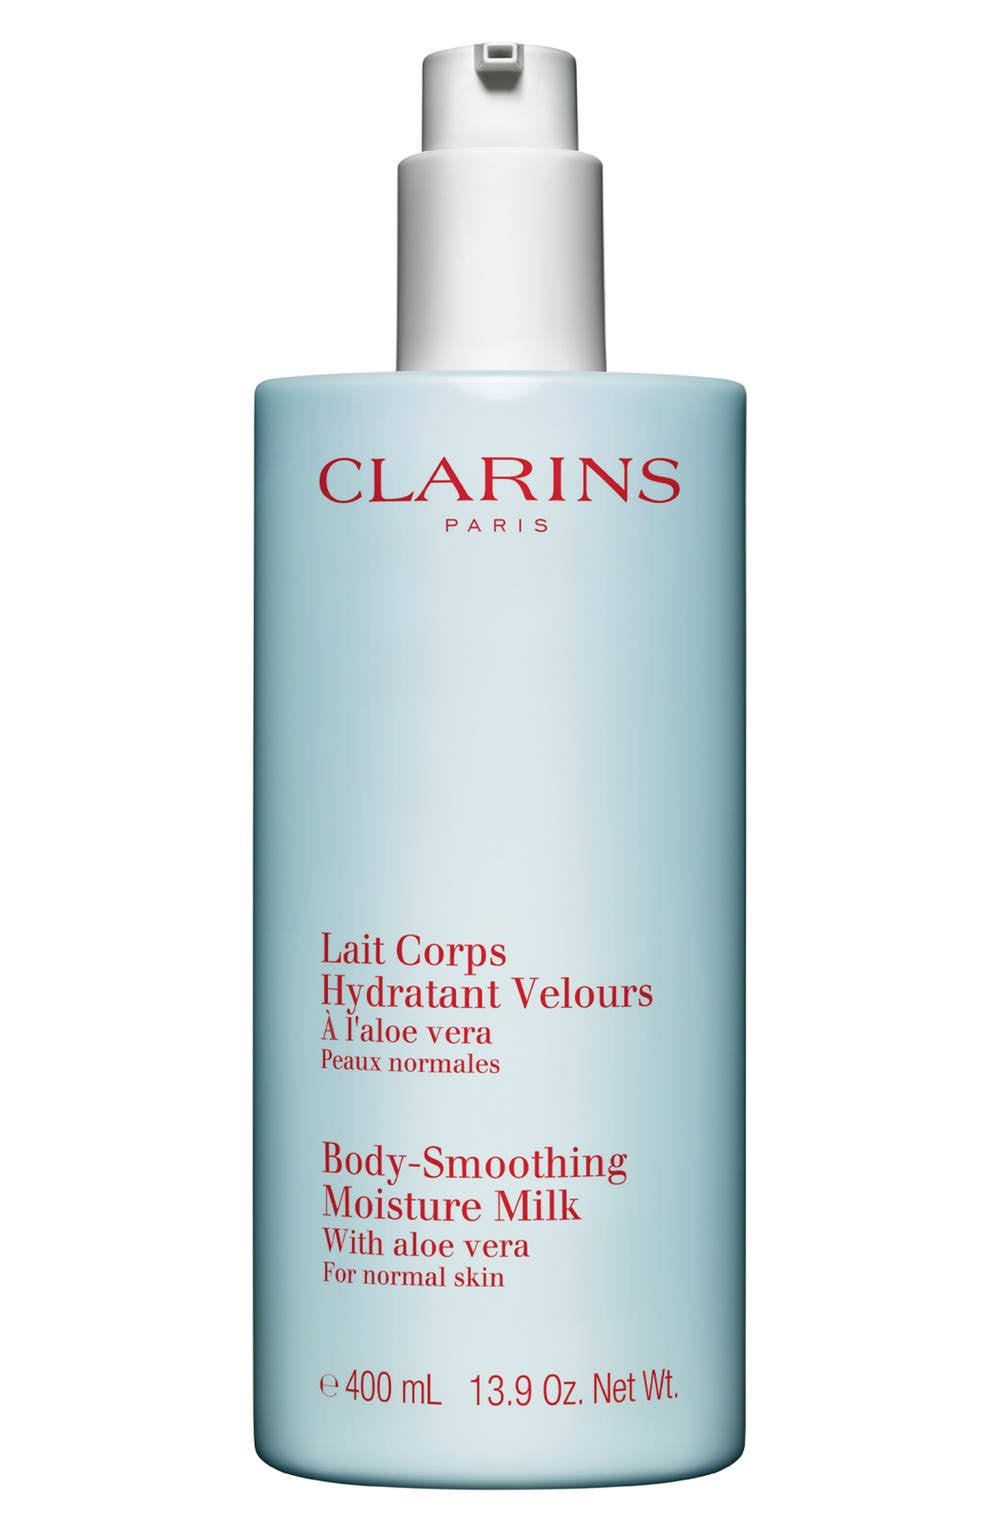 Clarins Body-Smoothing Moisture Milk 400.0 mL